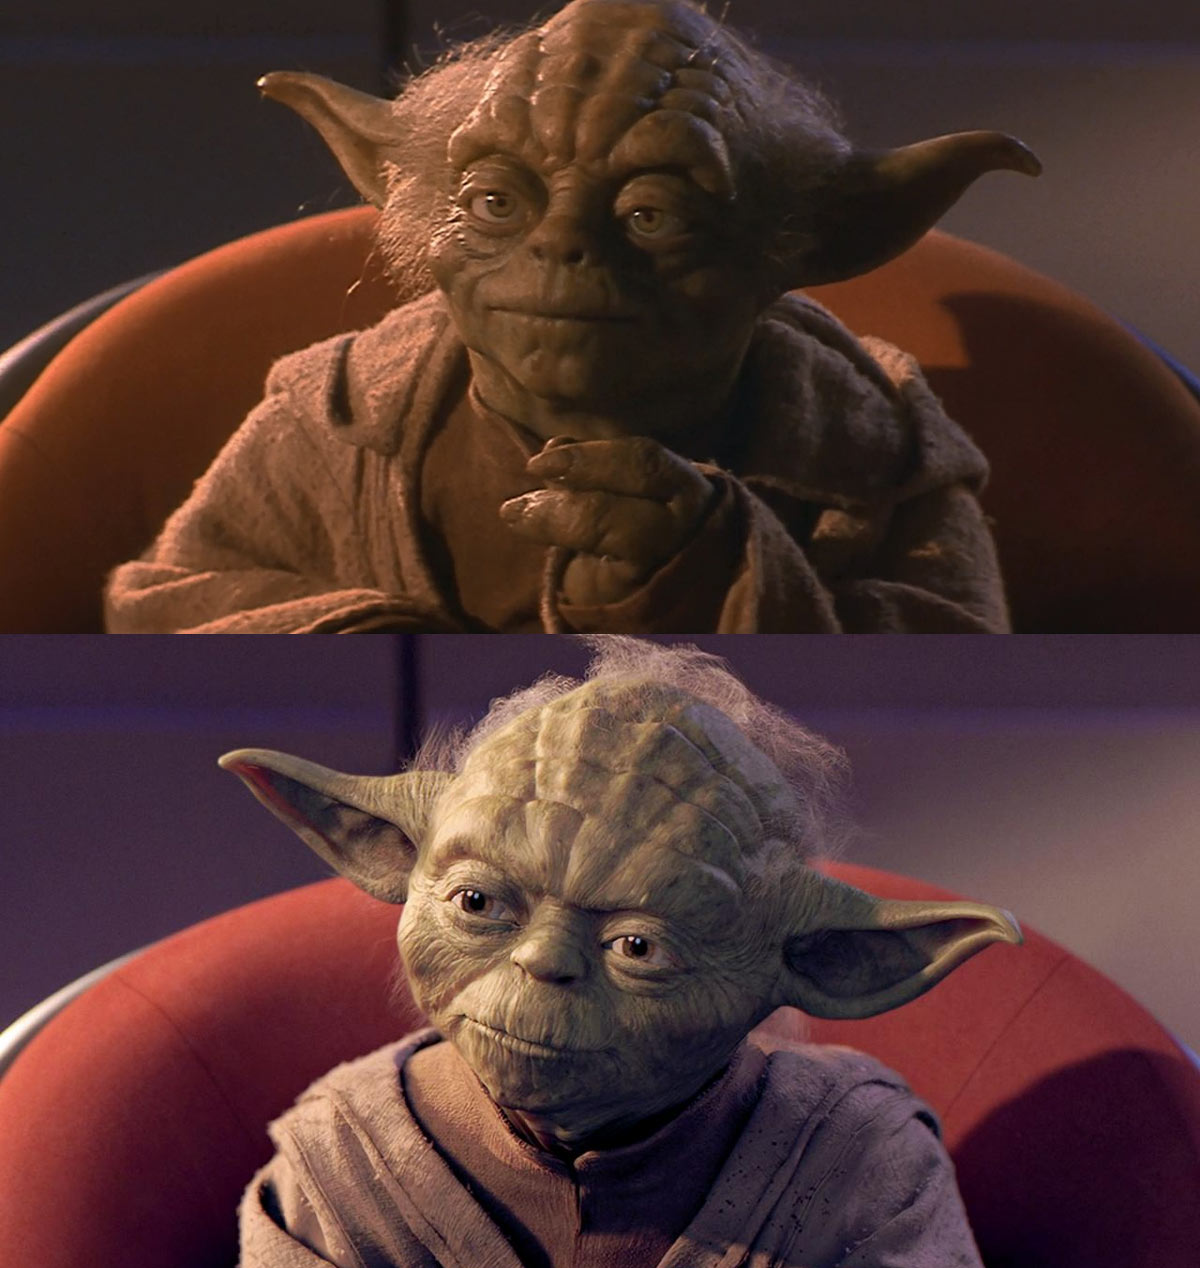 Yoda Puppet vs CGI